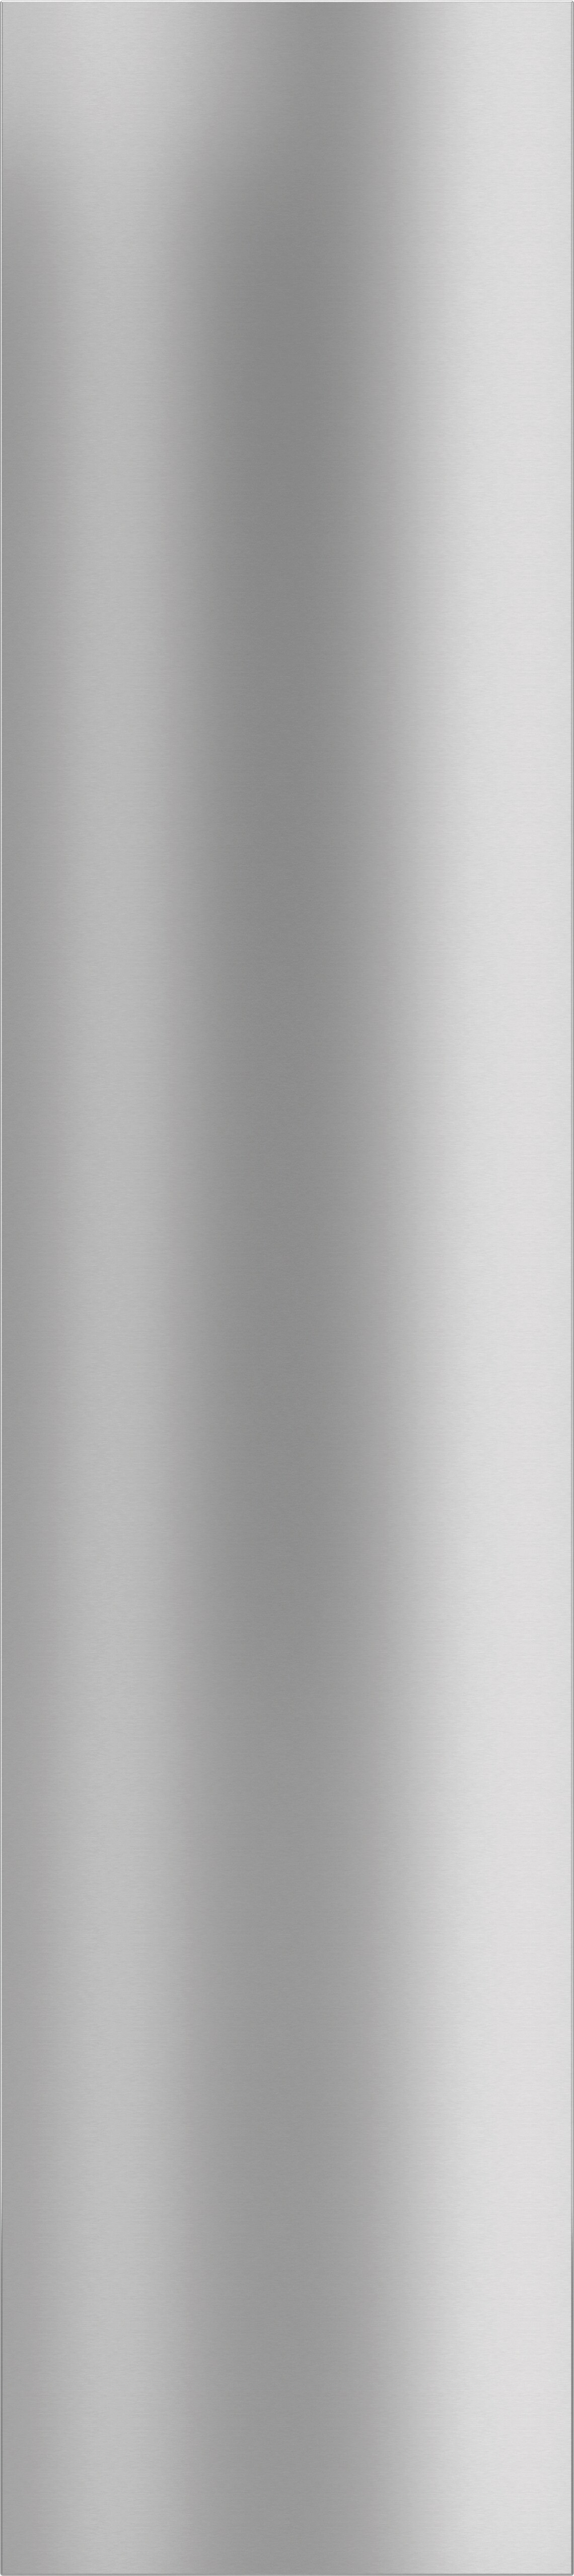 Réfrigérateurs/congélateurs - KFP 1805 ed/cs - 1